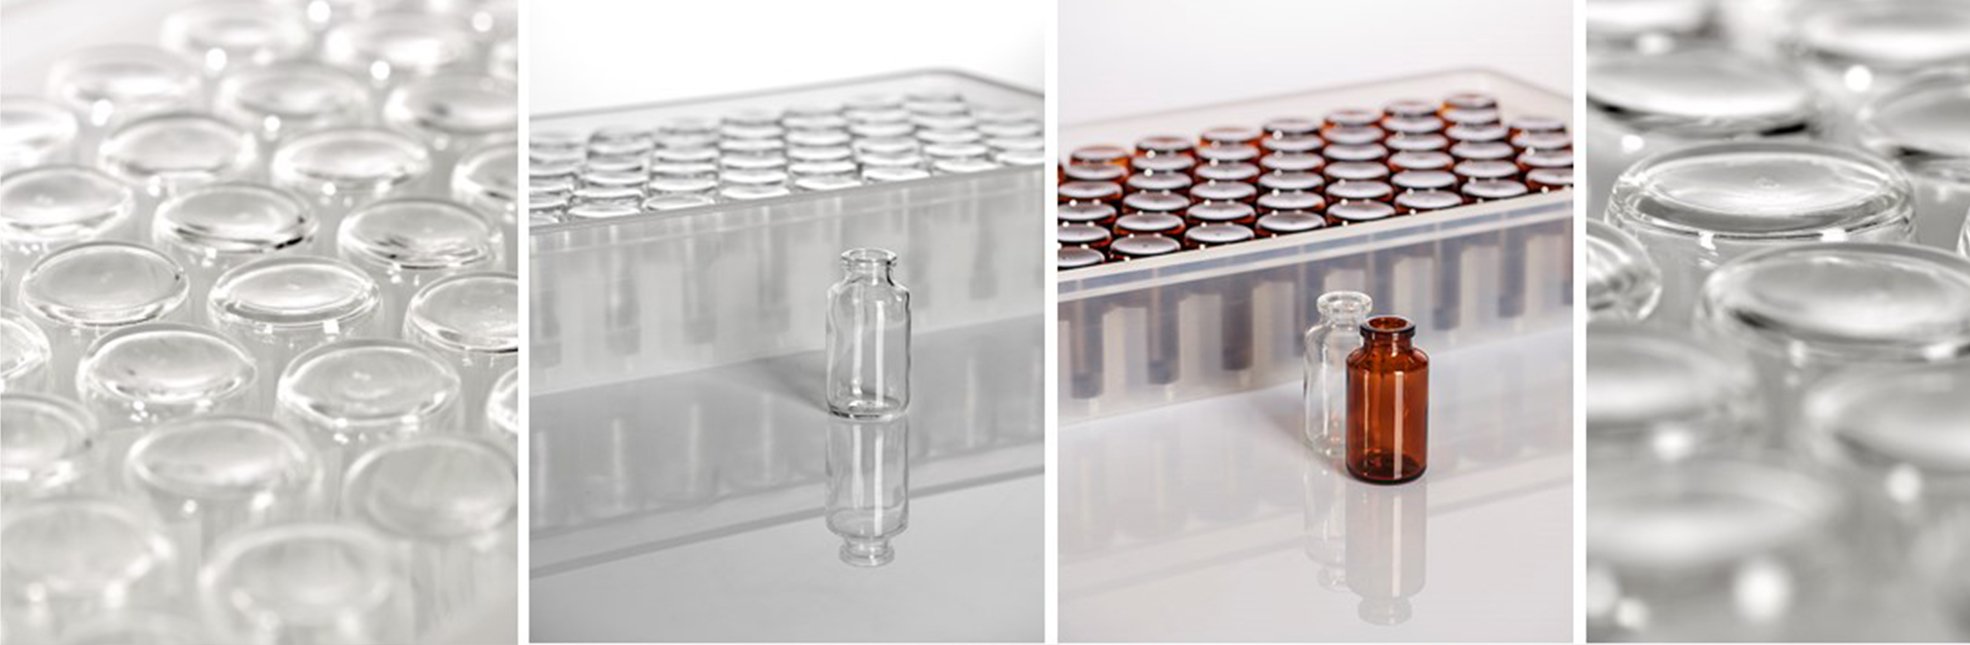 Type I molded glass vials